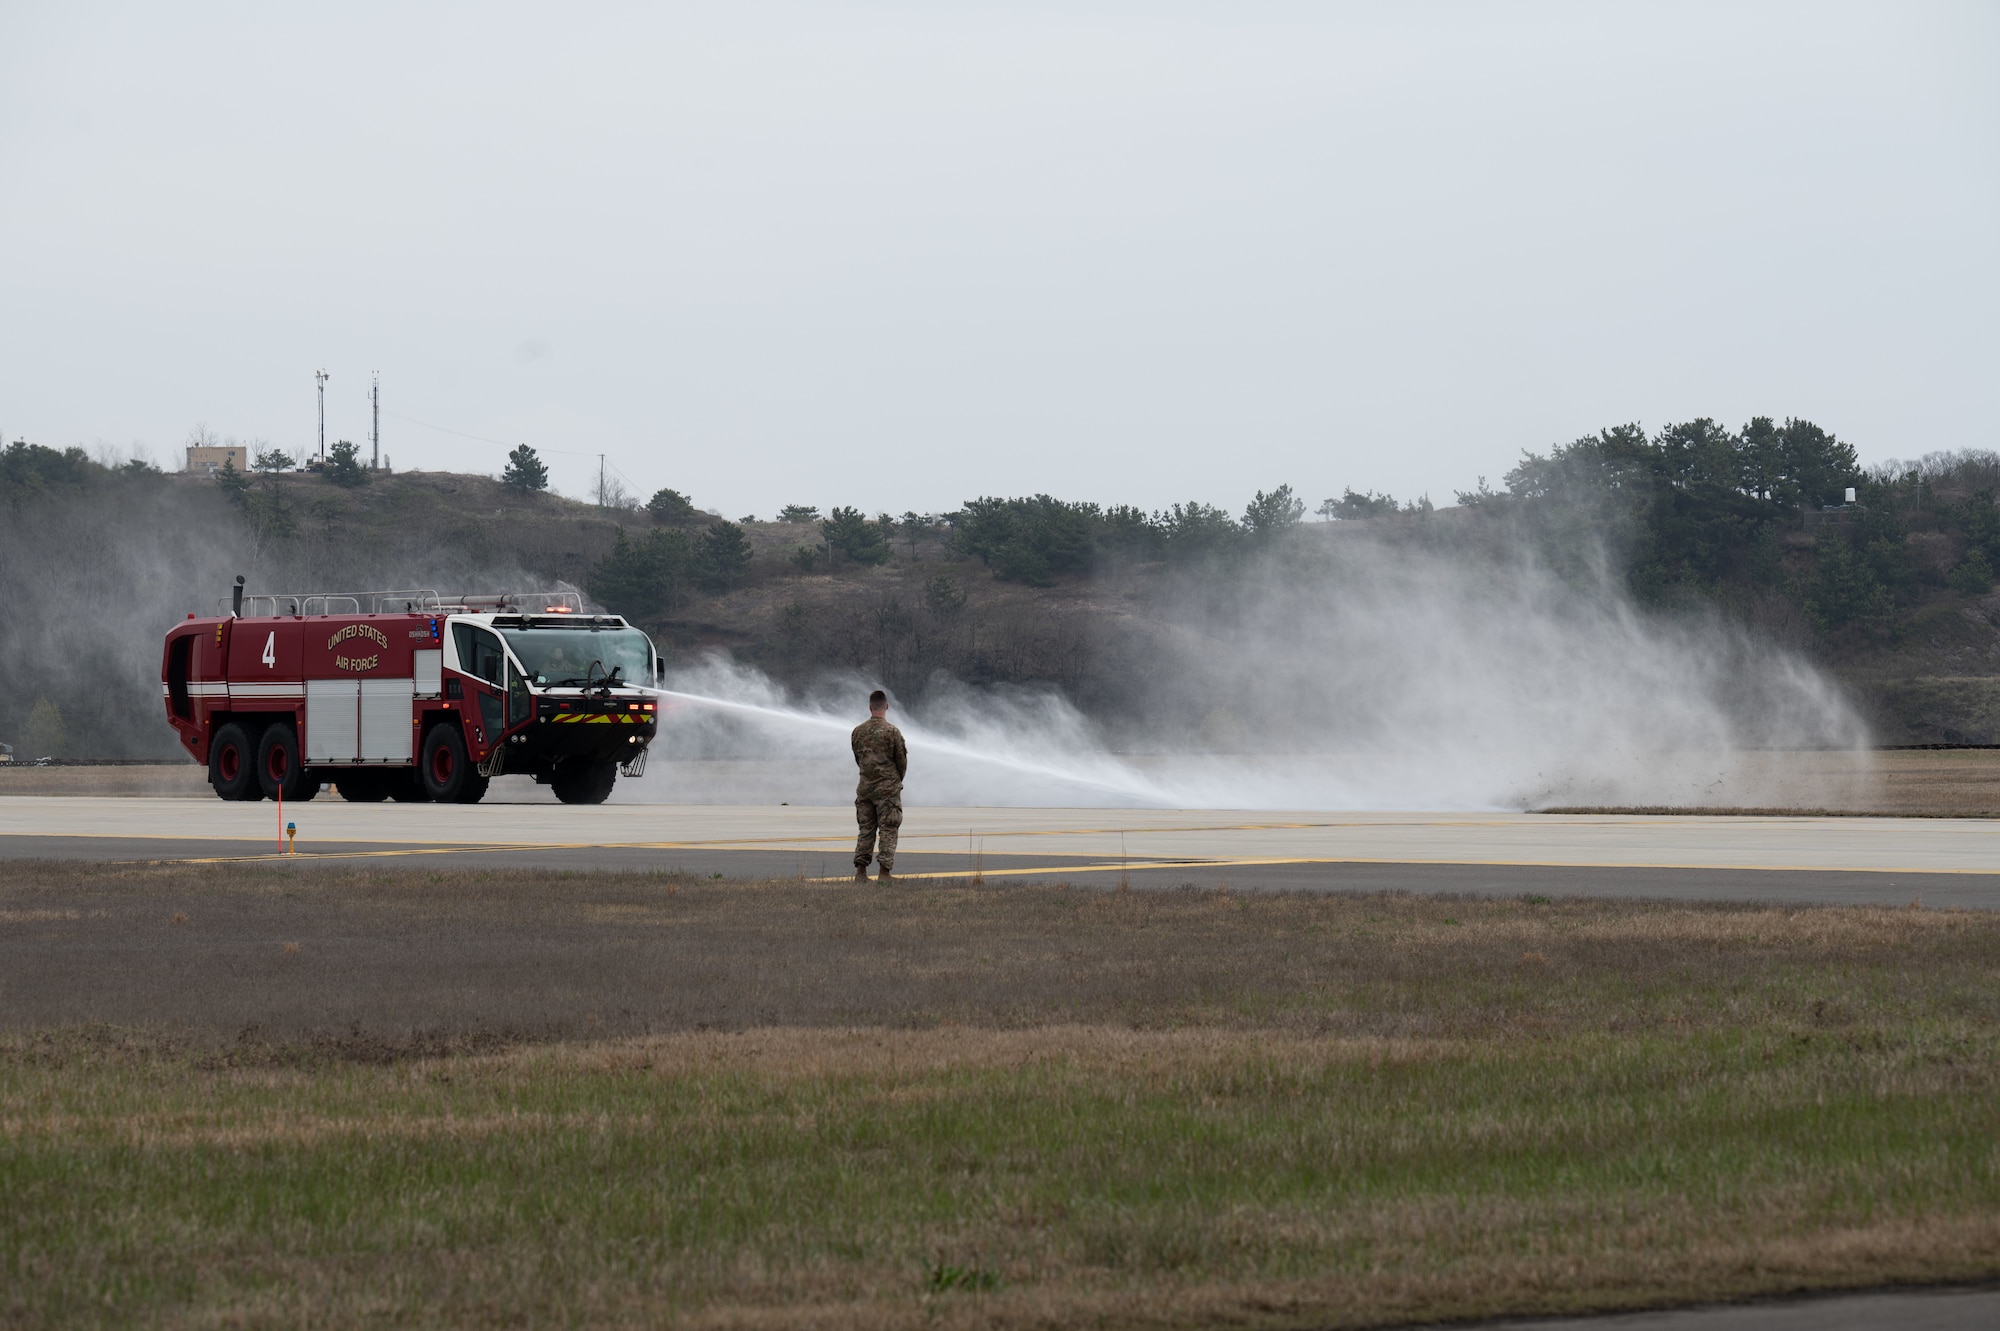 A firetruck sprays water onto concrete.